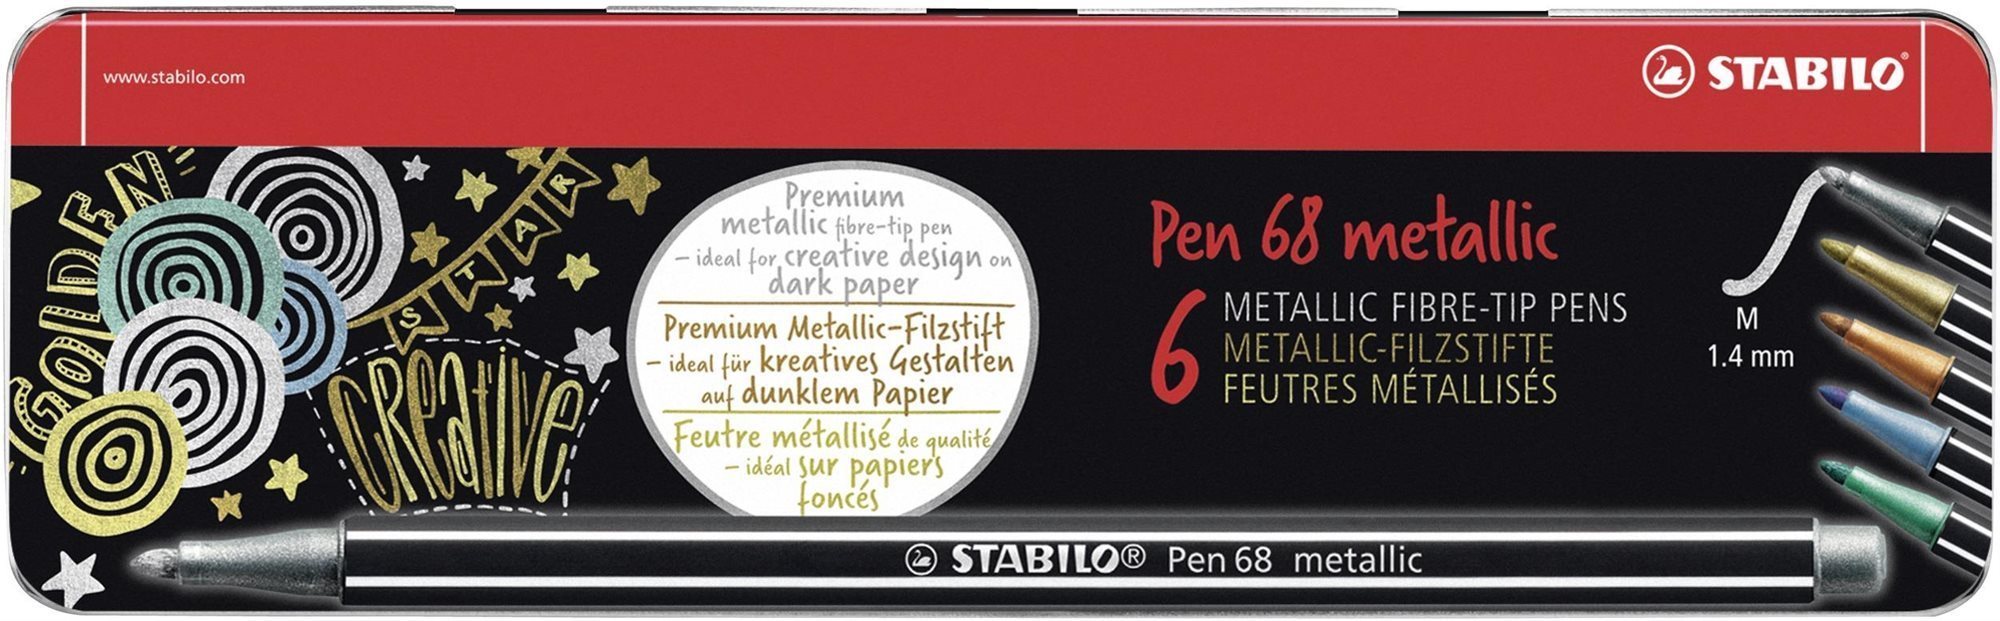 STABILO Pen 68 metallic 6 db fém tok